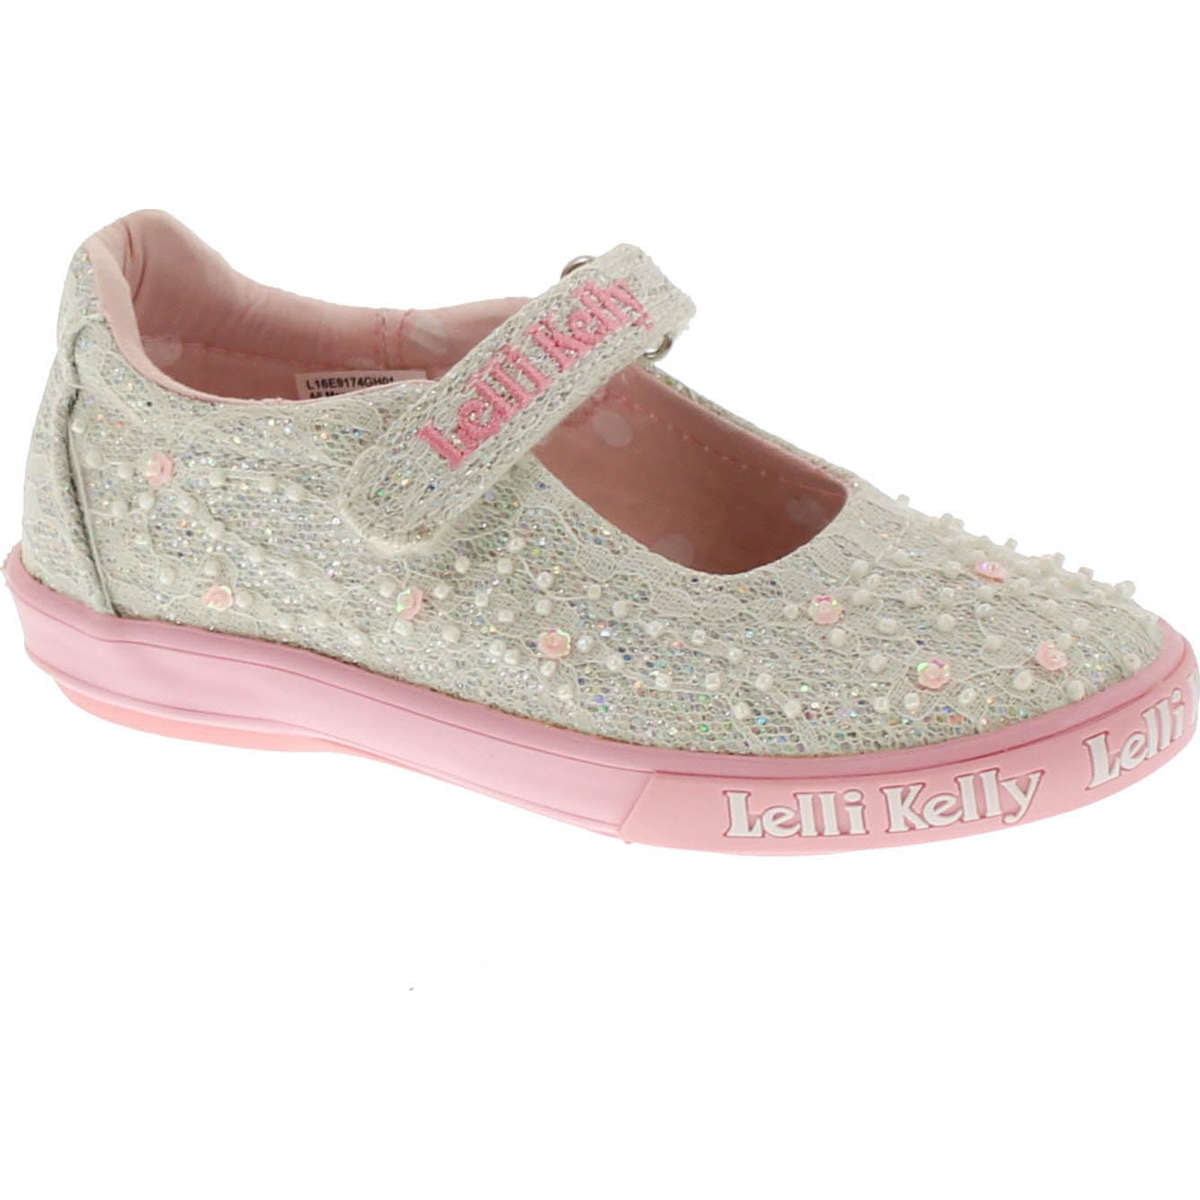 Lelli Kelly Kids Girls LK9174 Fashion Mary Jane Flats Shoes, Silver ...